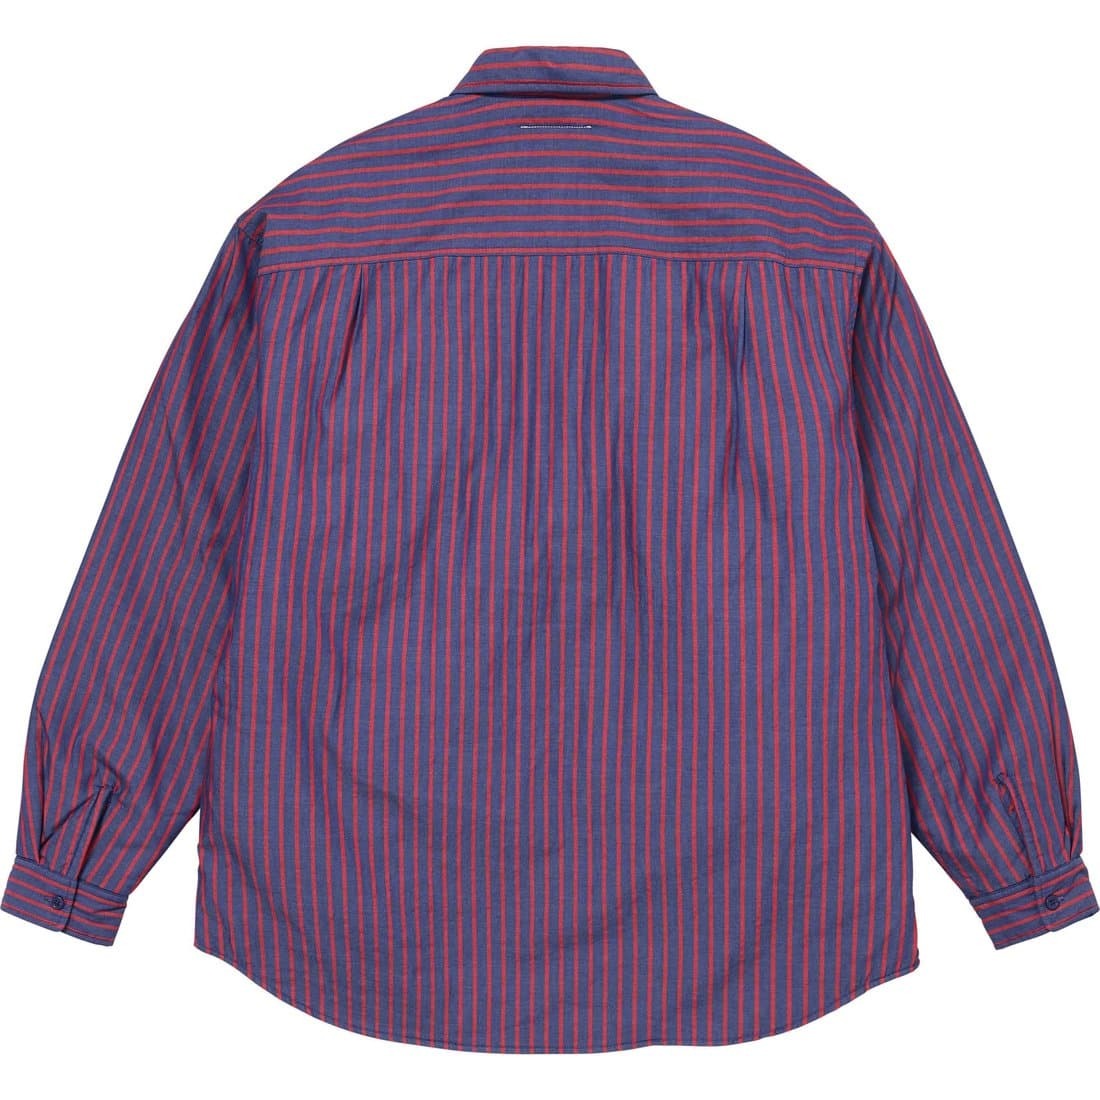 Mサイズ Supreme MM6 Maison Margiela Padded Shirt Stripe ストライプ シュプリーム メゾン マルジェラ ボックスロゴ パデッド シャツの画像3